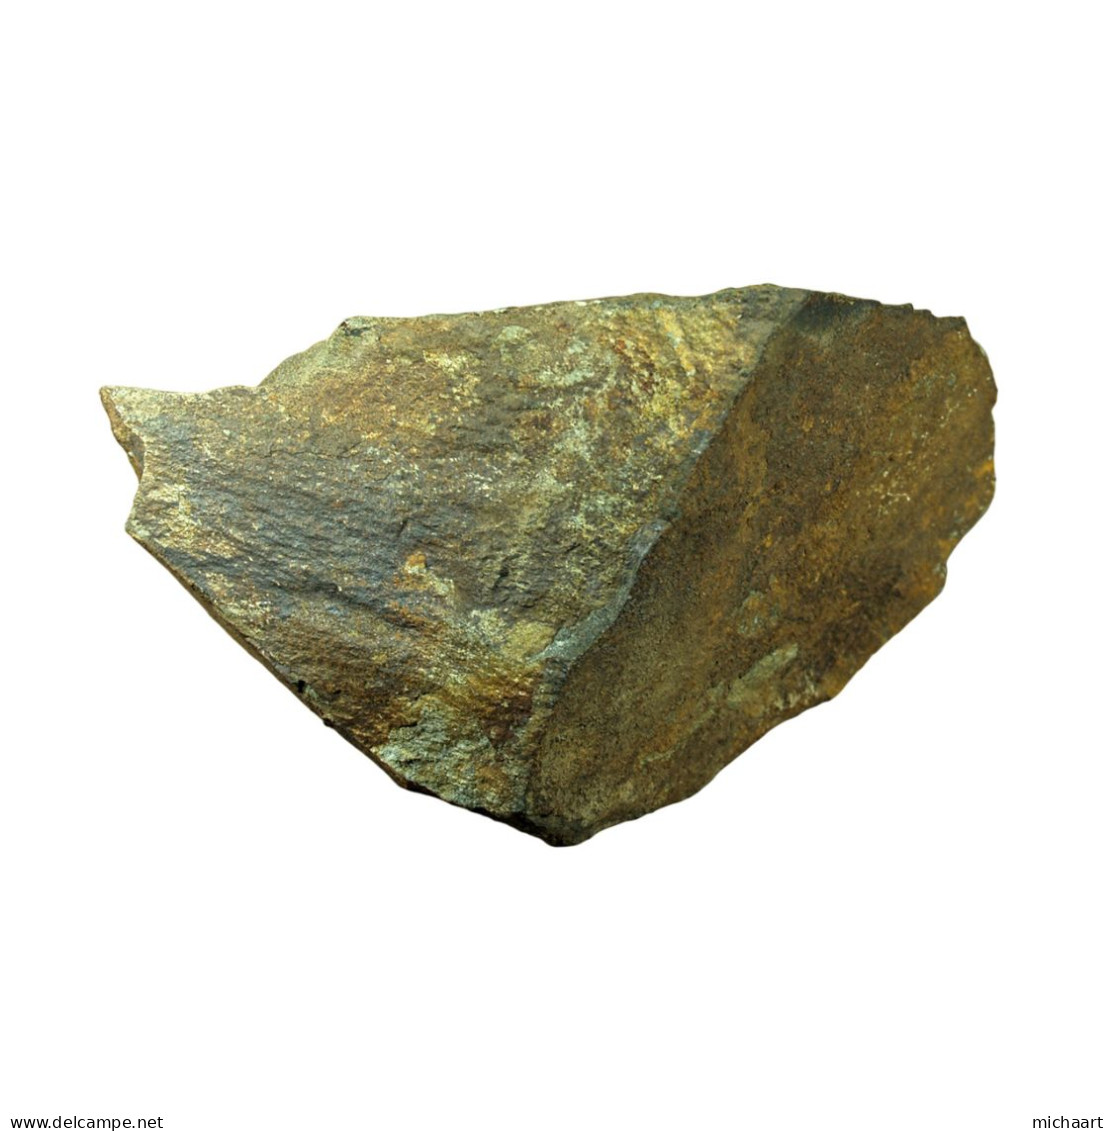 Sheeted Dike Mineral Rock Specimen 965g - 34 Oz Cyprus Troodos Ophiolite 04397 - Mineralien